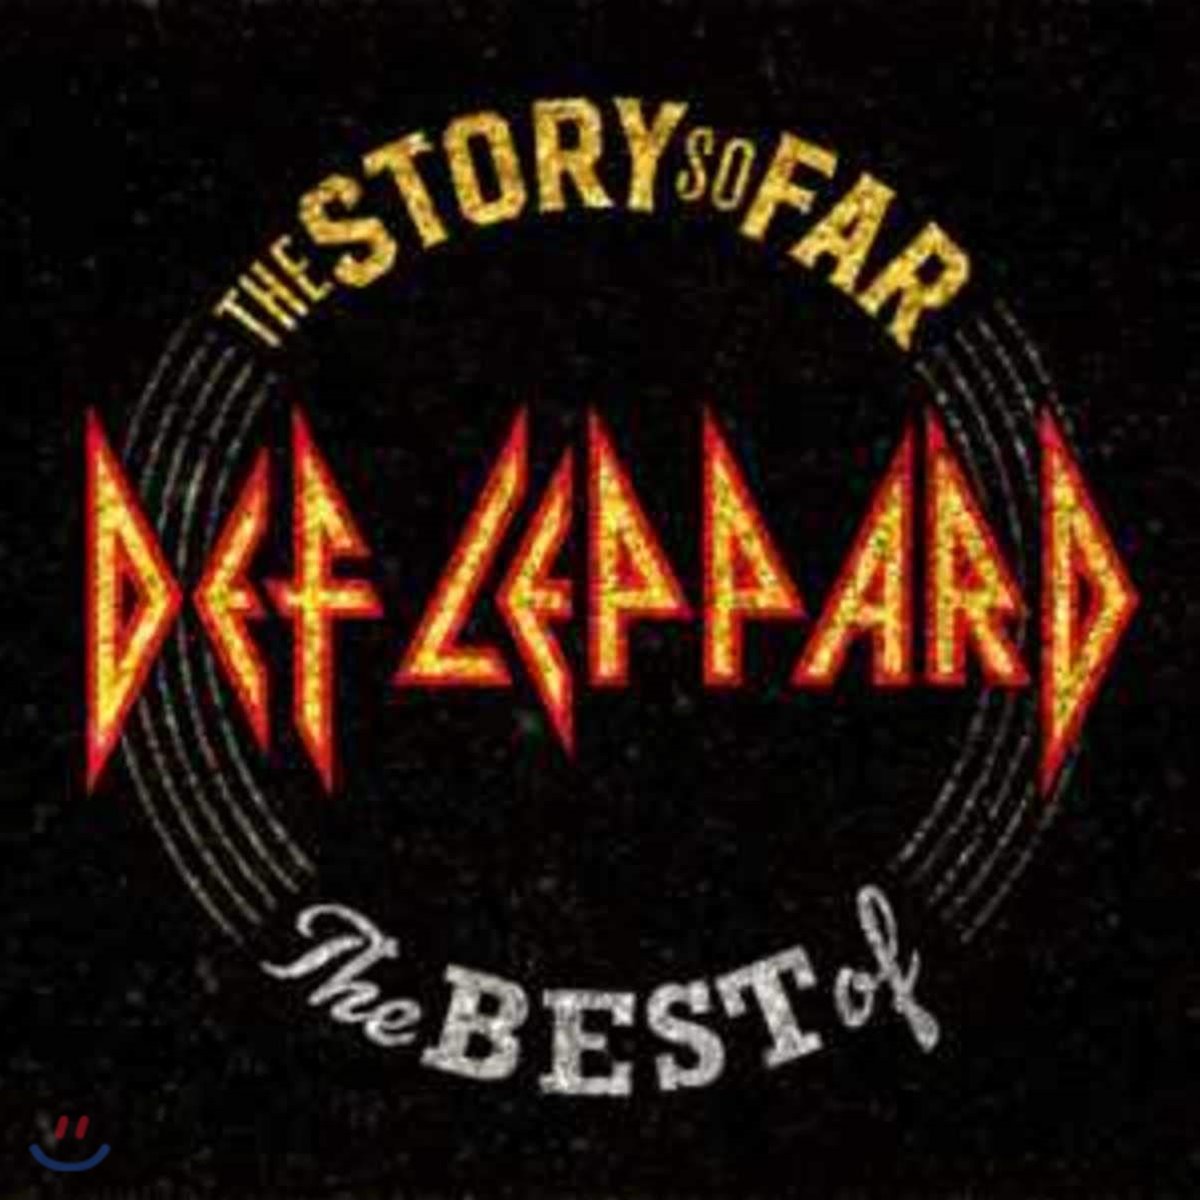 Def Leppard (데프 레퍼드) - Story So Far... The Best